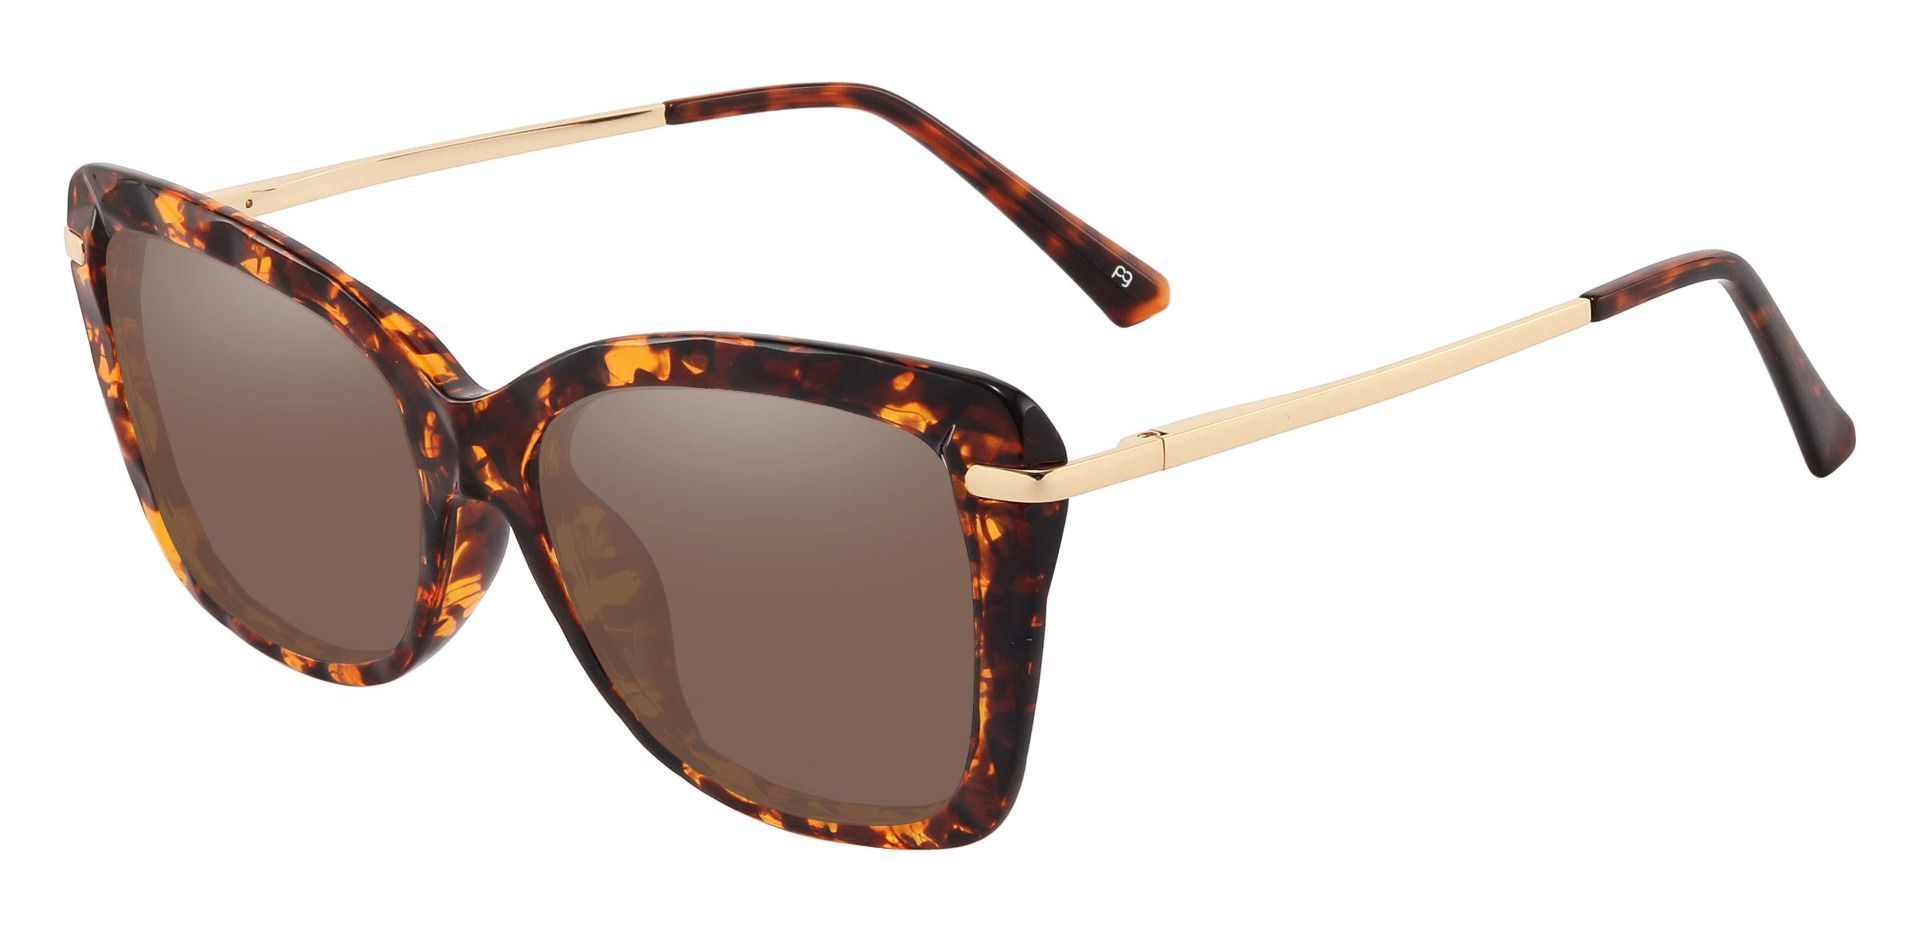 Shoshanna Rectangle Non-Rx Sunglasses - Tortoise Frame With Brown Lenses